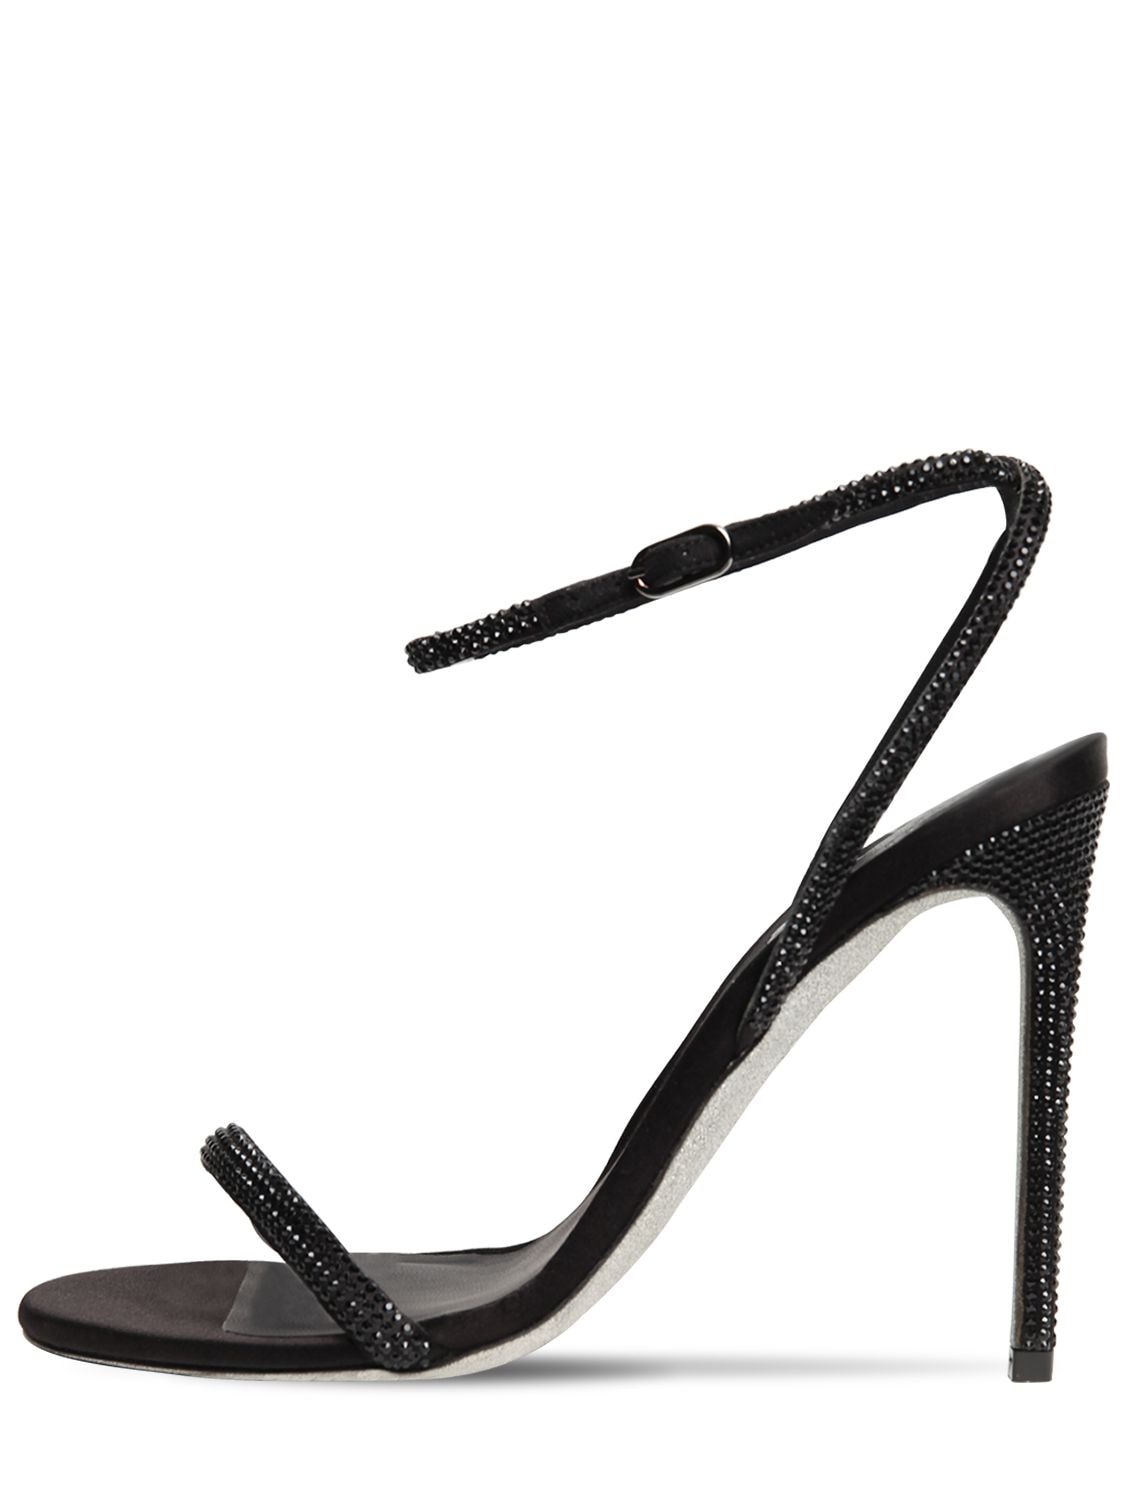 René Caovilla 105mm Embellished Leather & Satin Sandal In Black | ModeSens